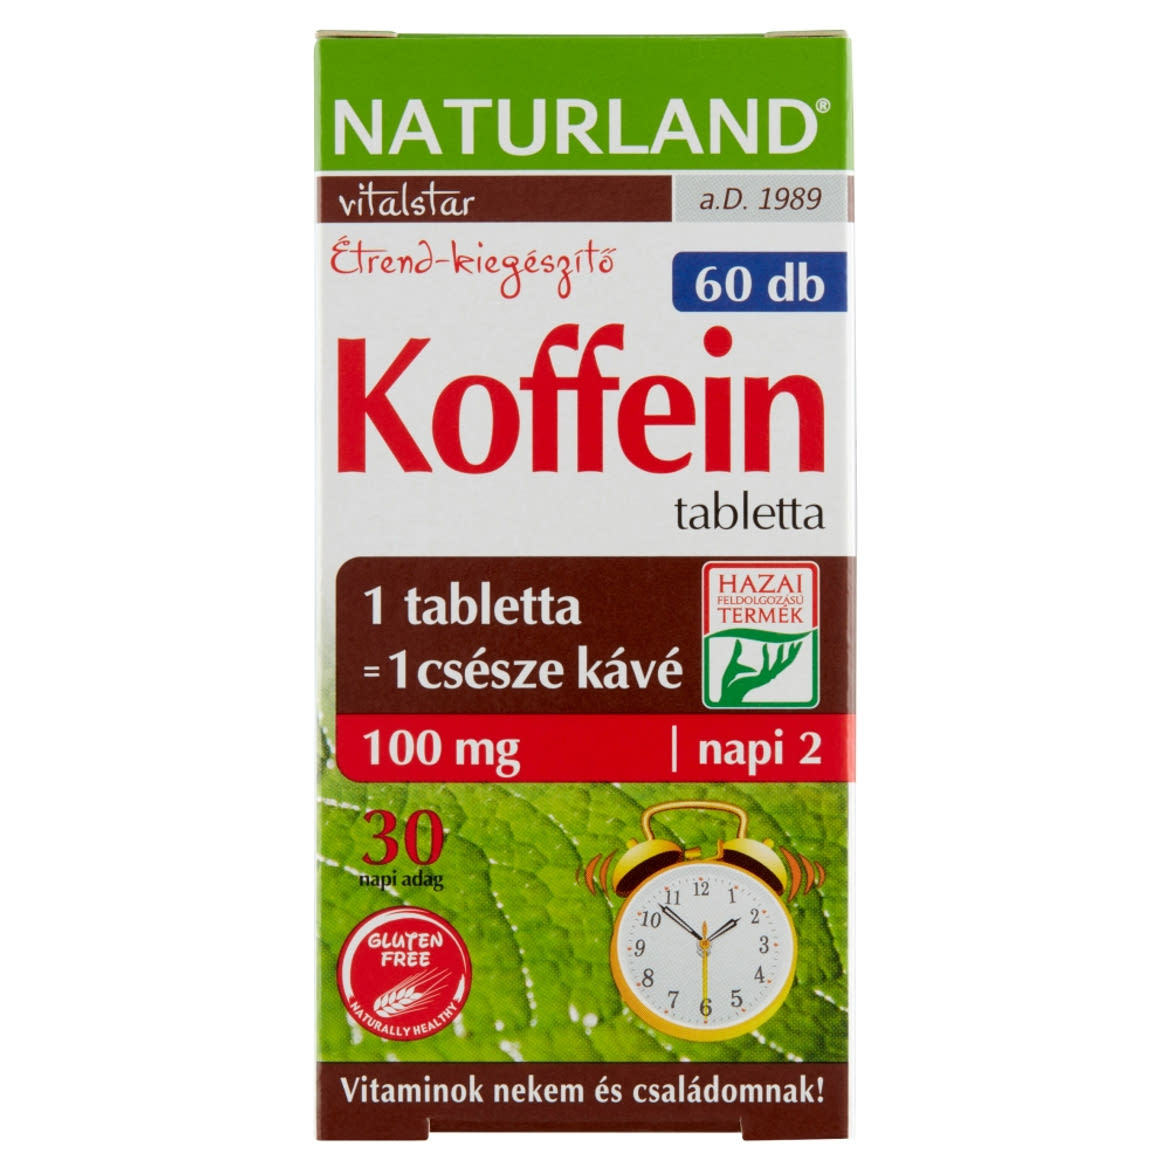 Naturland Vitalstar koffein étrend-kiegészítő tabletta